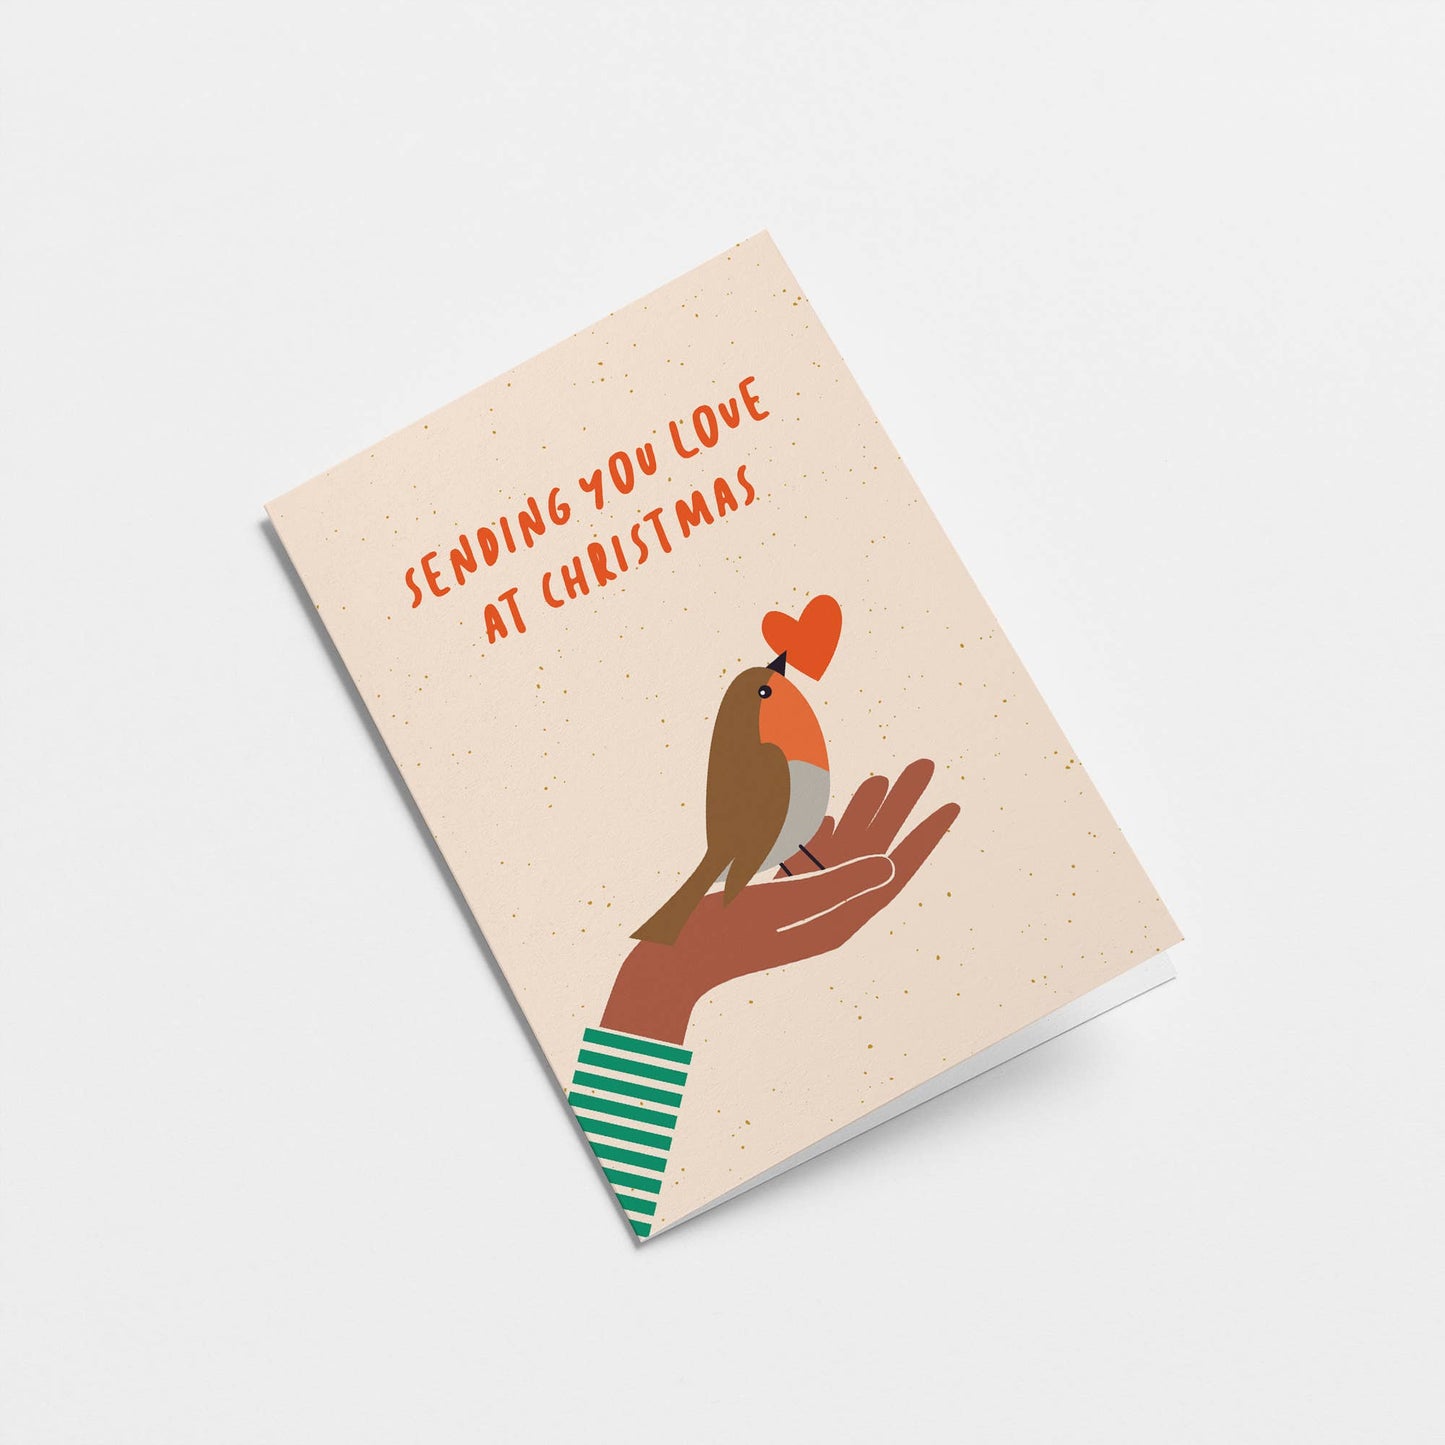 Sending you love at Christmas - Seasonal Greeting Card: English / Cello free